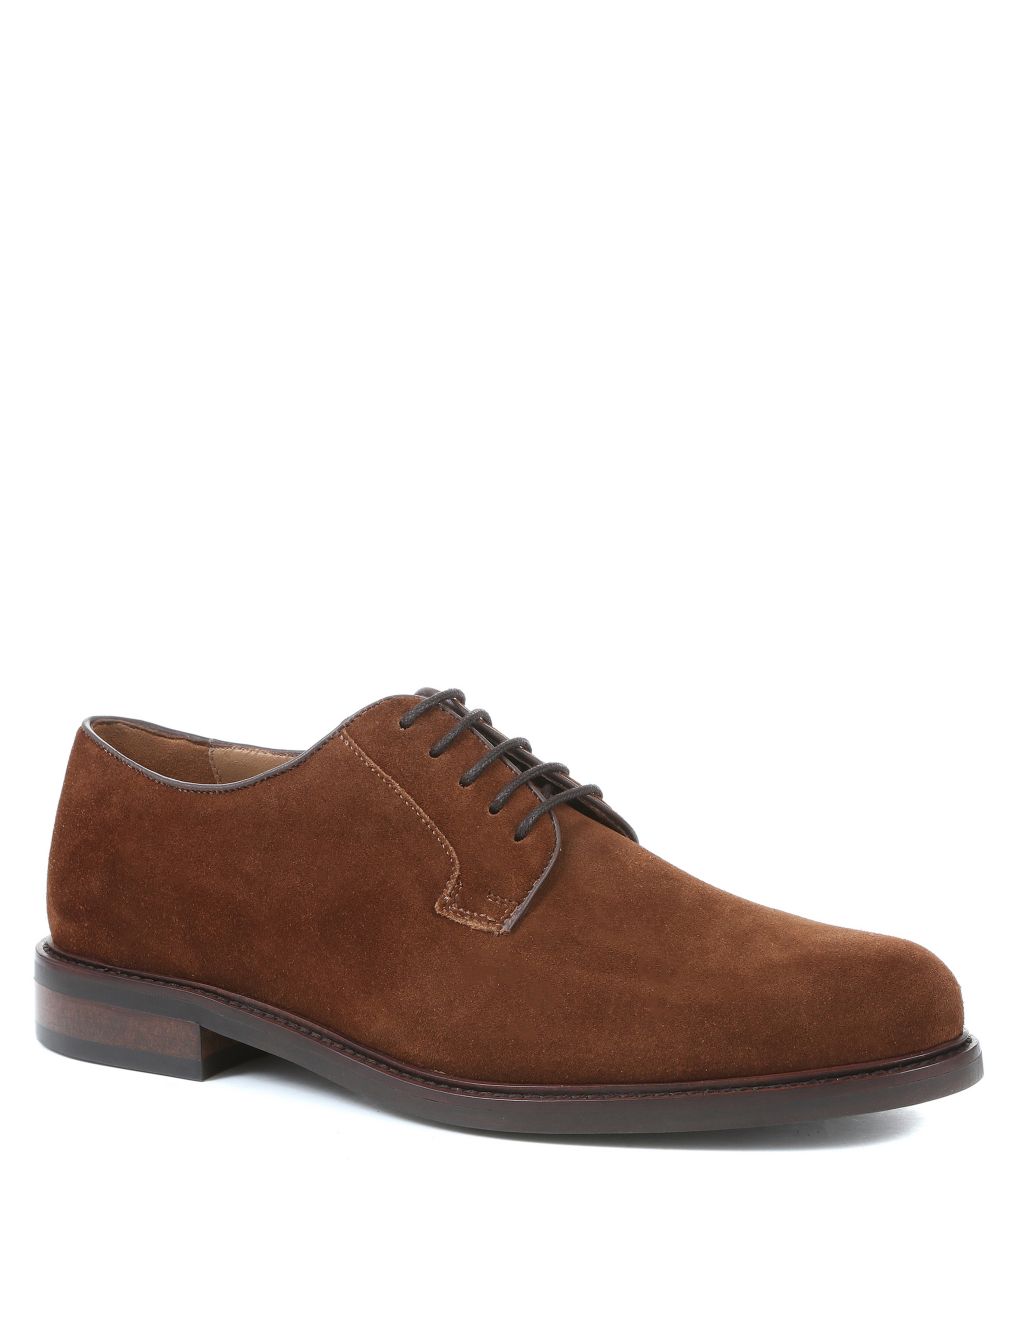 Leather Derby Shoes | Jones Bootmaker | M&S